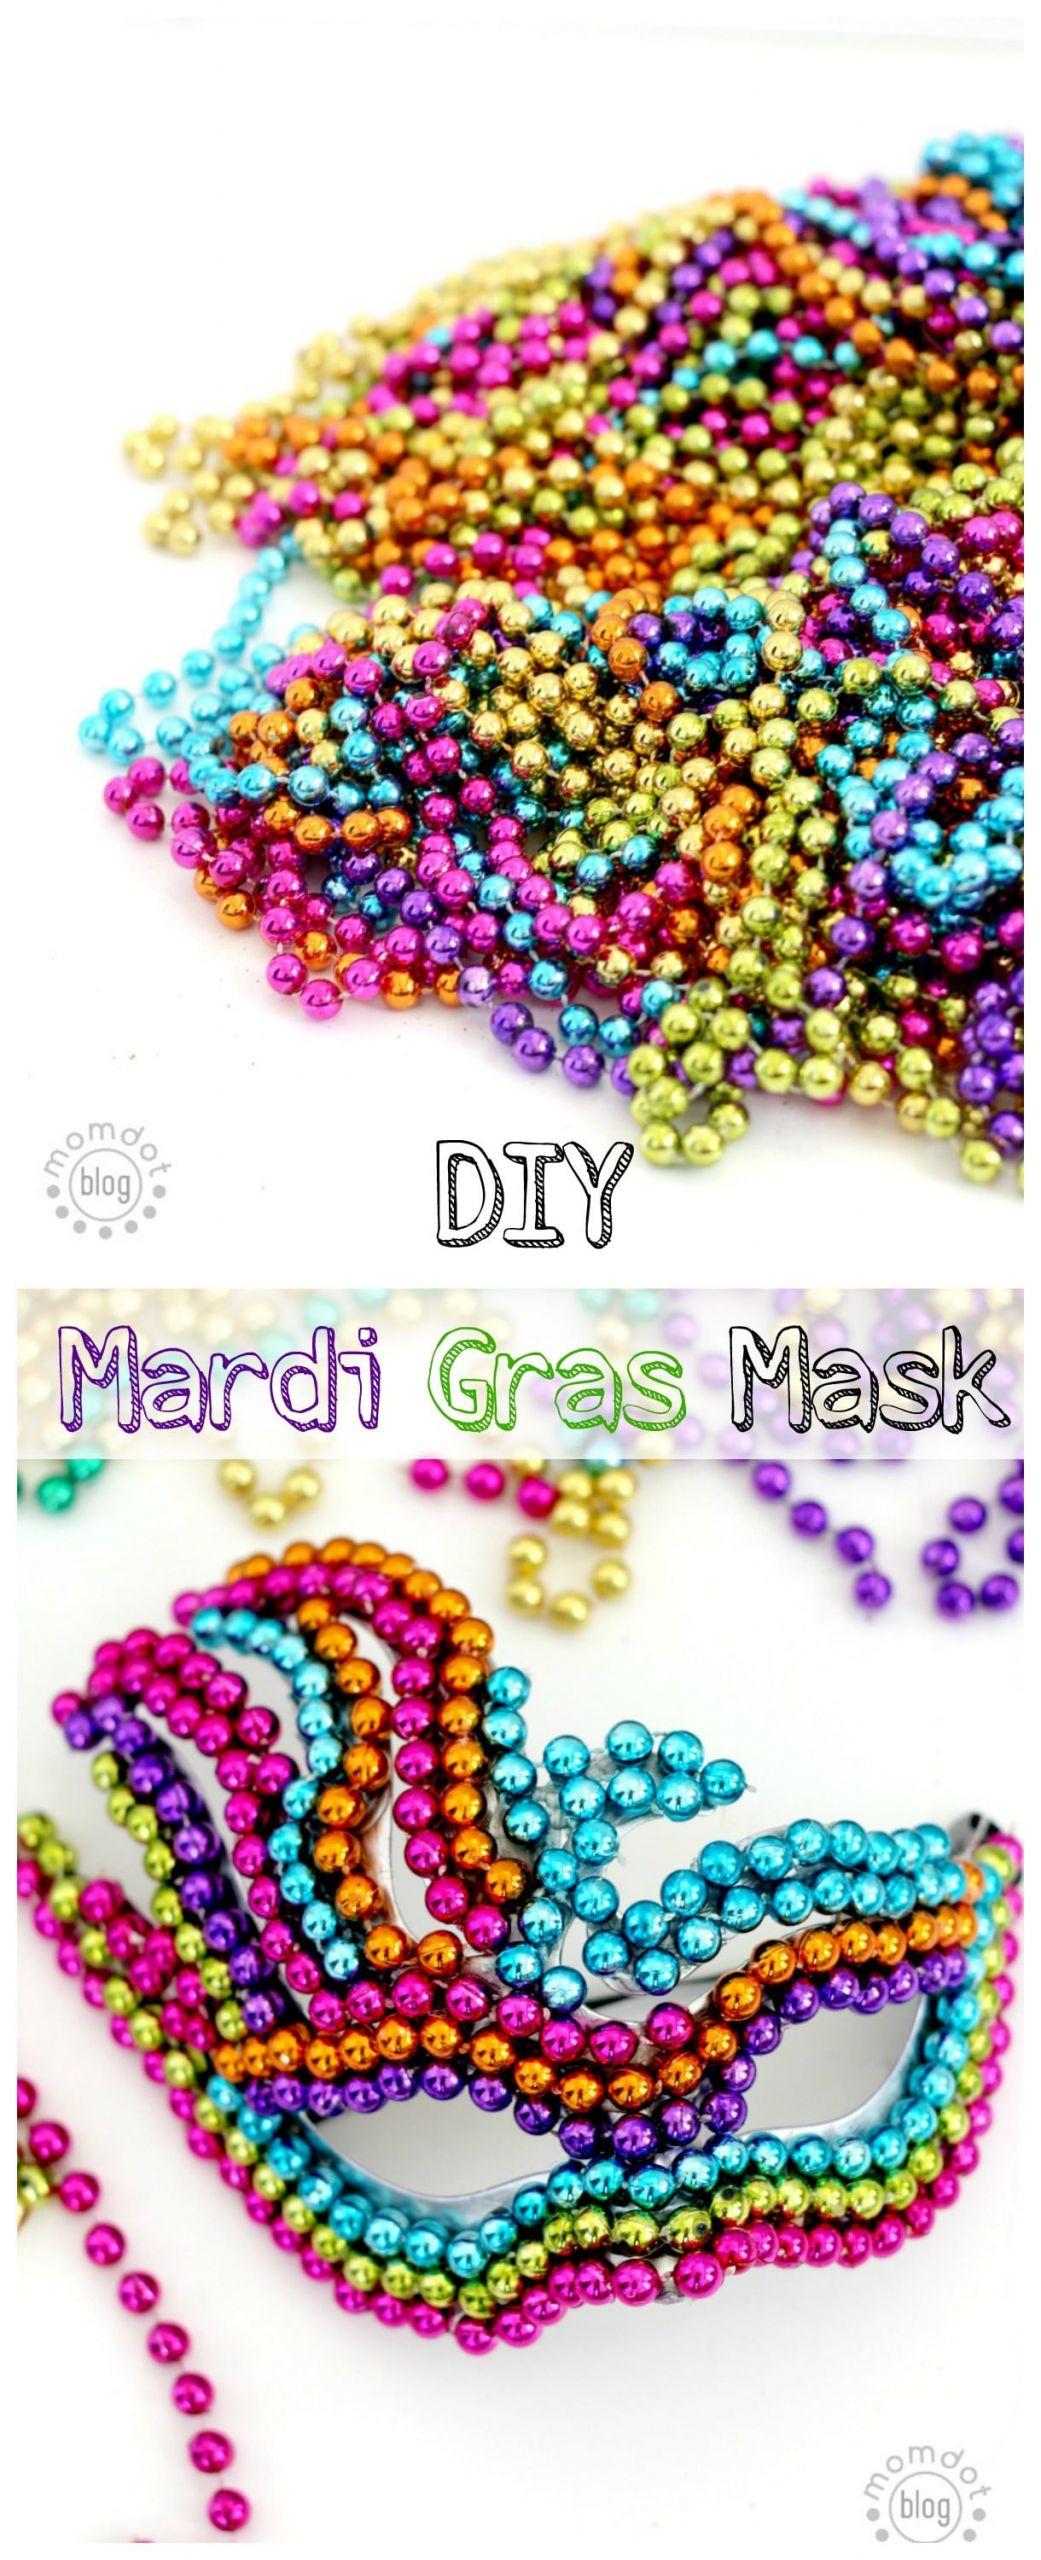 DIY Mardi Gras Masks
 DIY Mardi Gras Mask